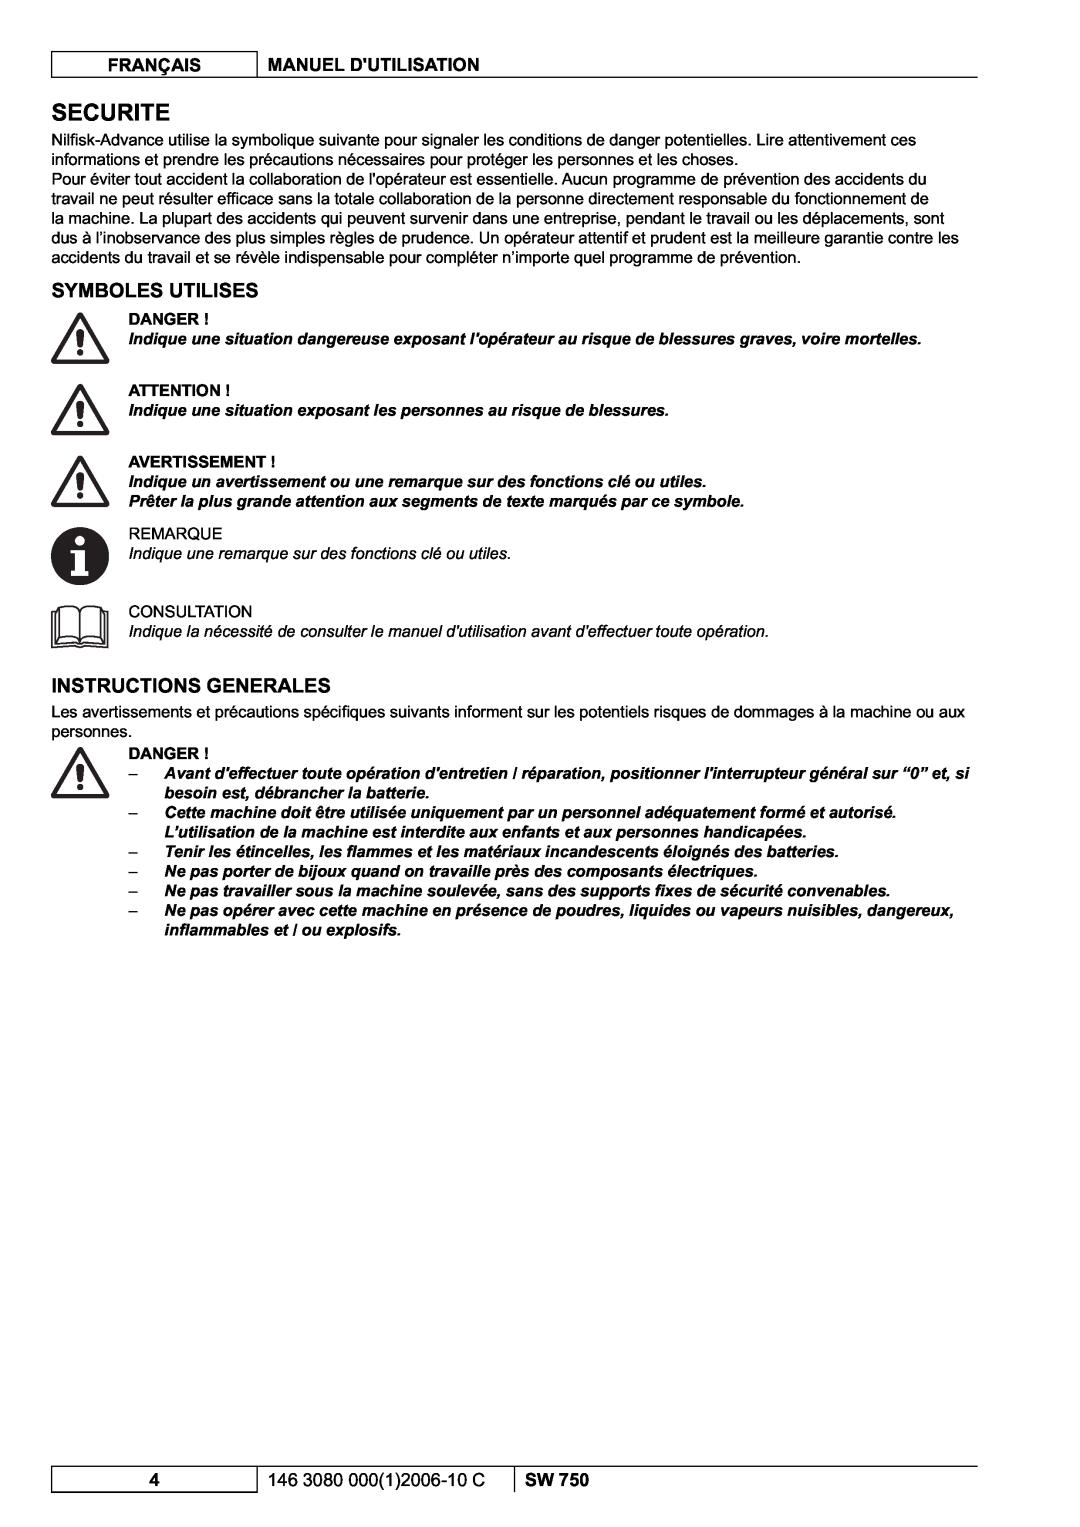 Nilfisk-ALTO SW 750 manuel dutilisation Securite, Symboles Utilises, Instructions Generales, Danger, Avertissement 